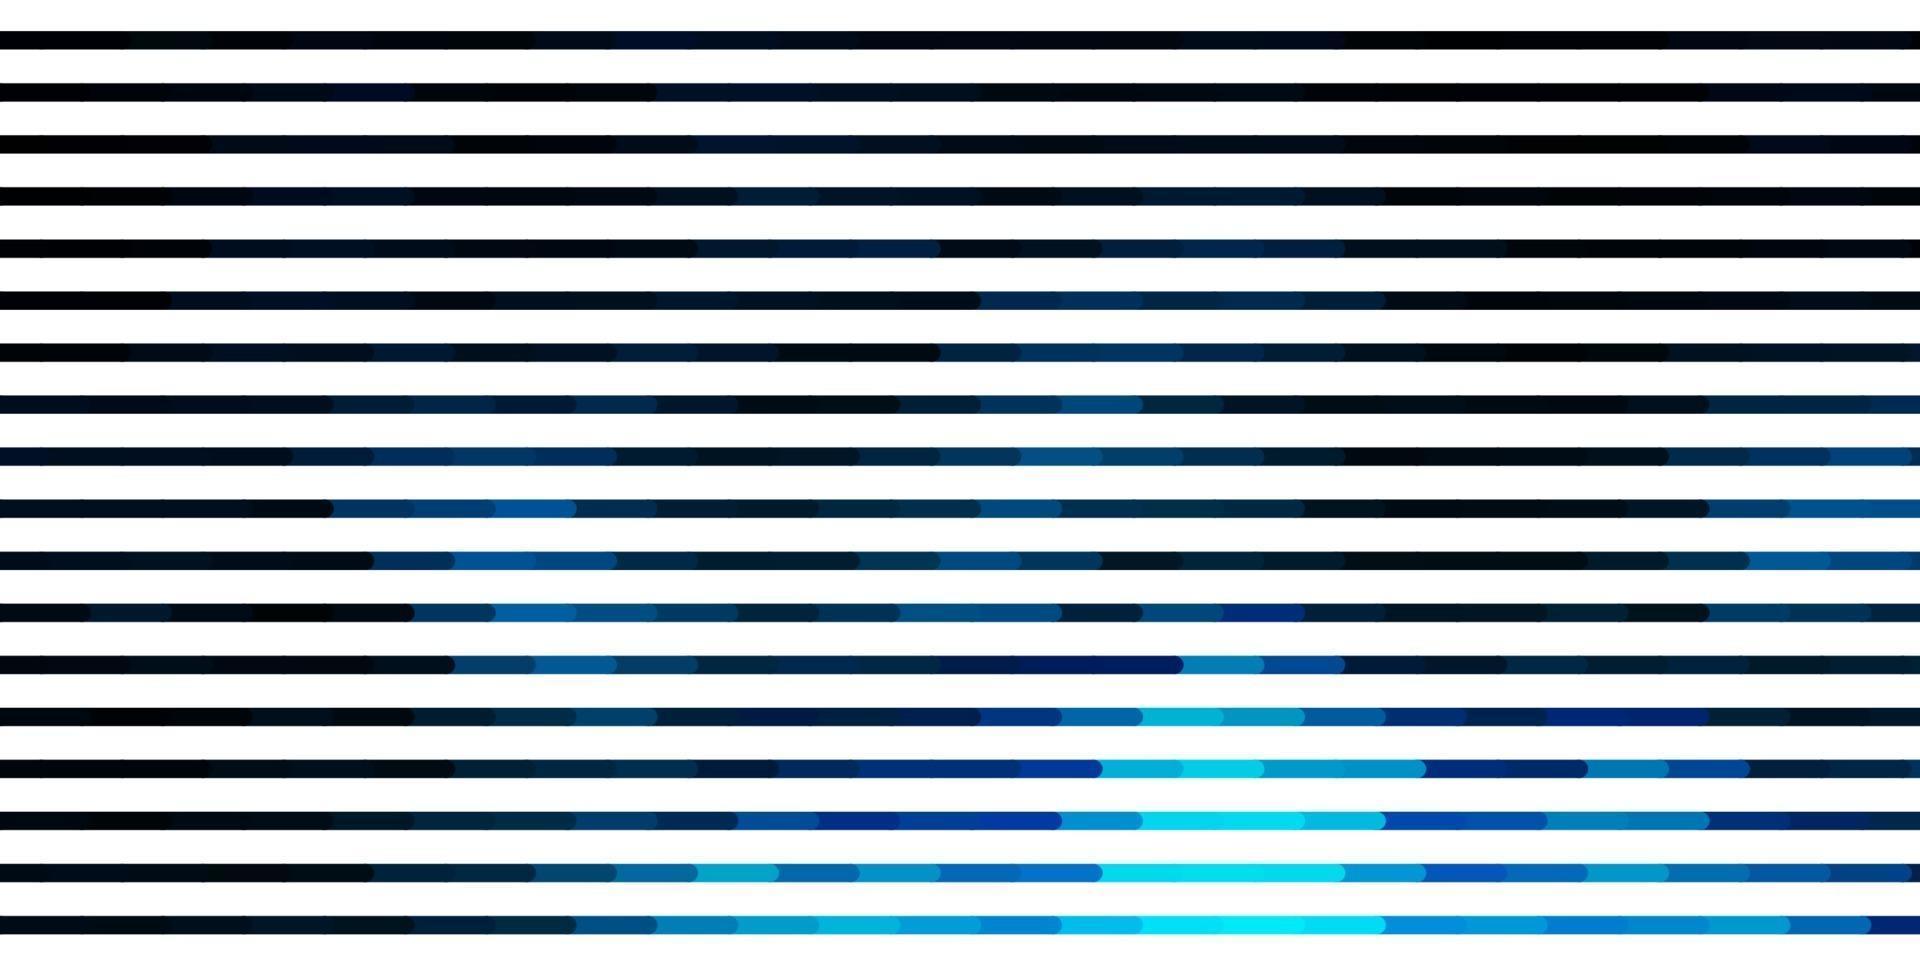 mörkblå vektor bakgrund med linjer.